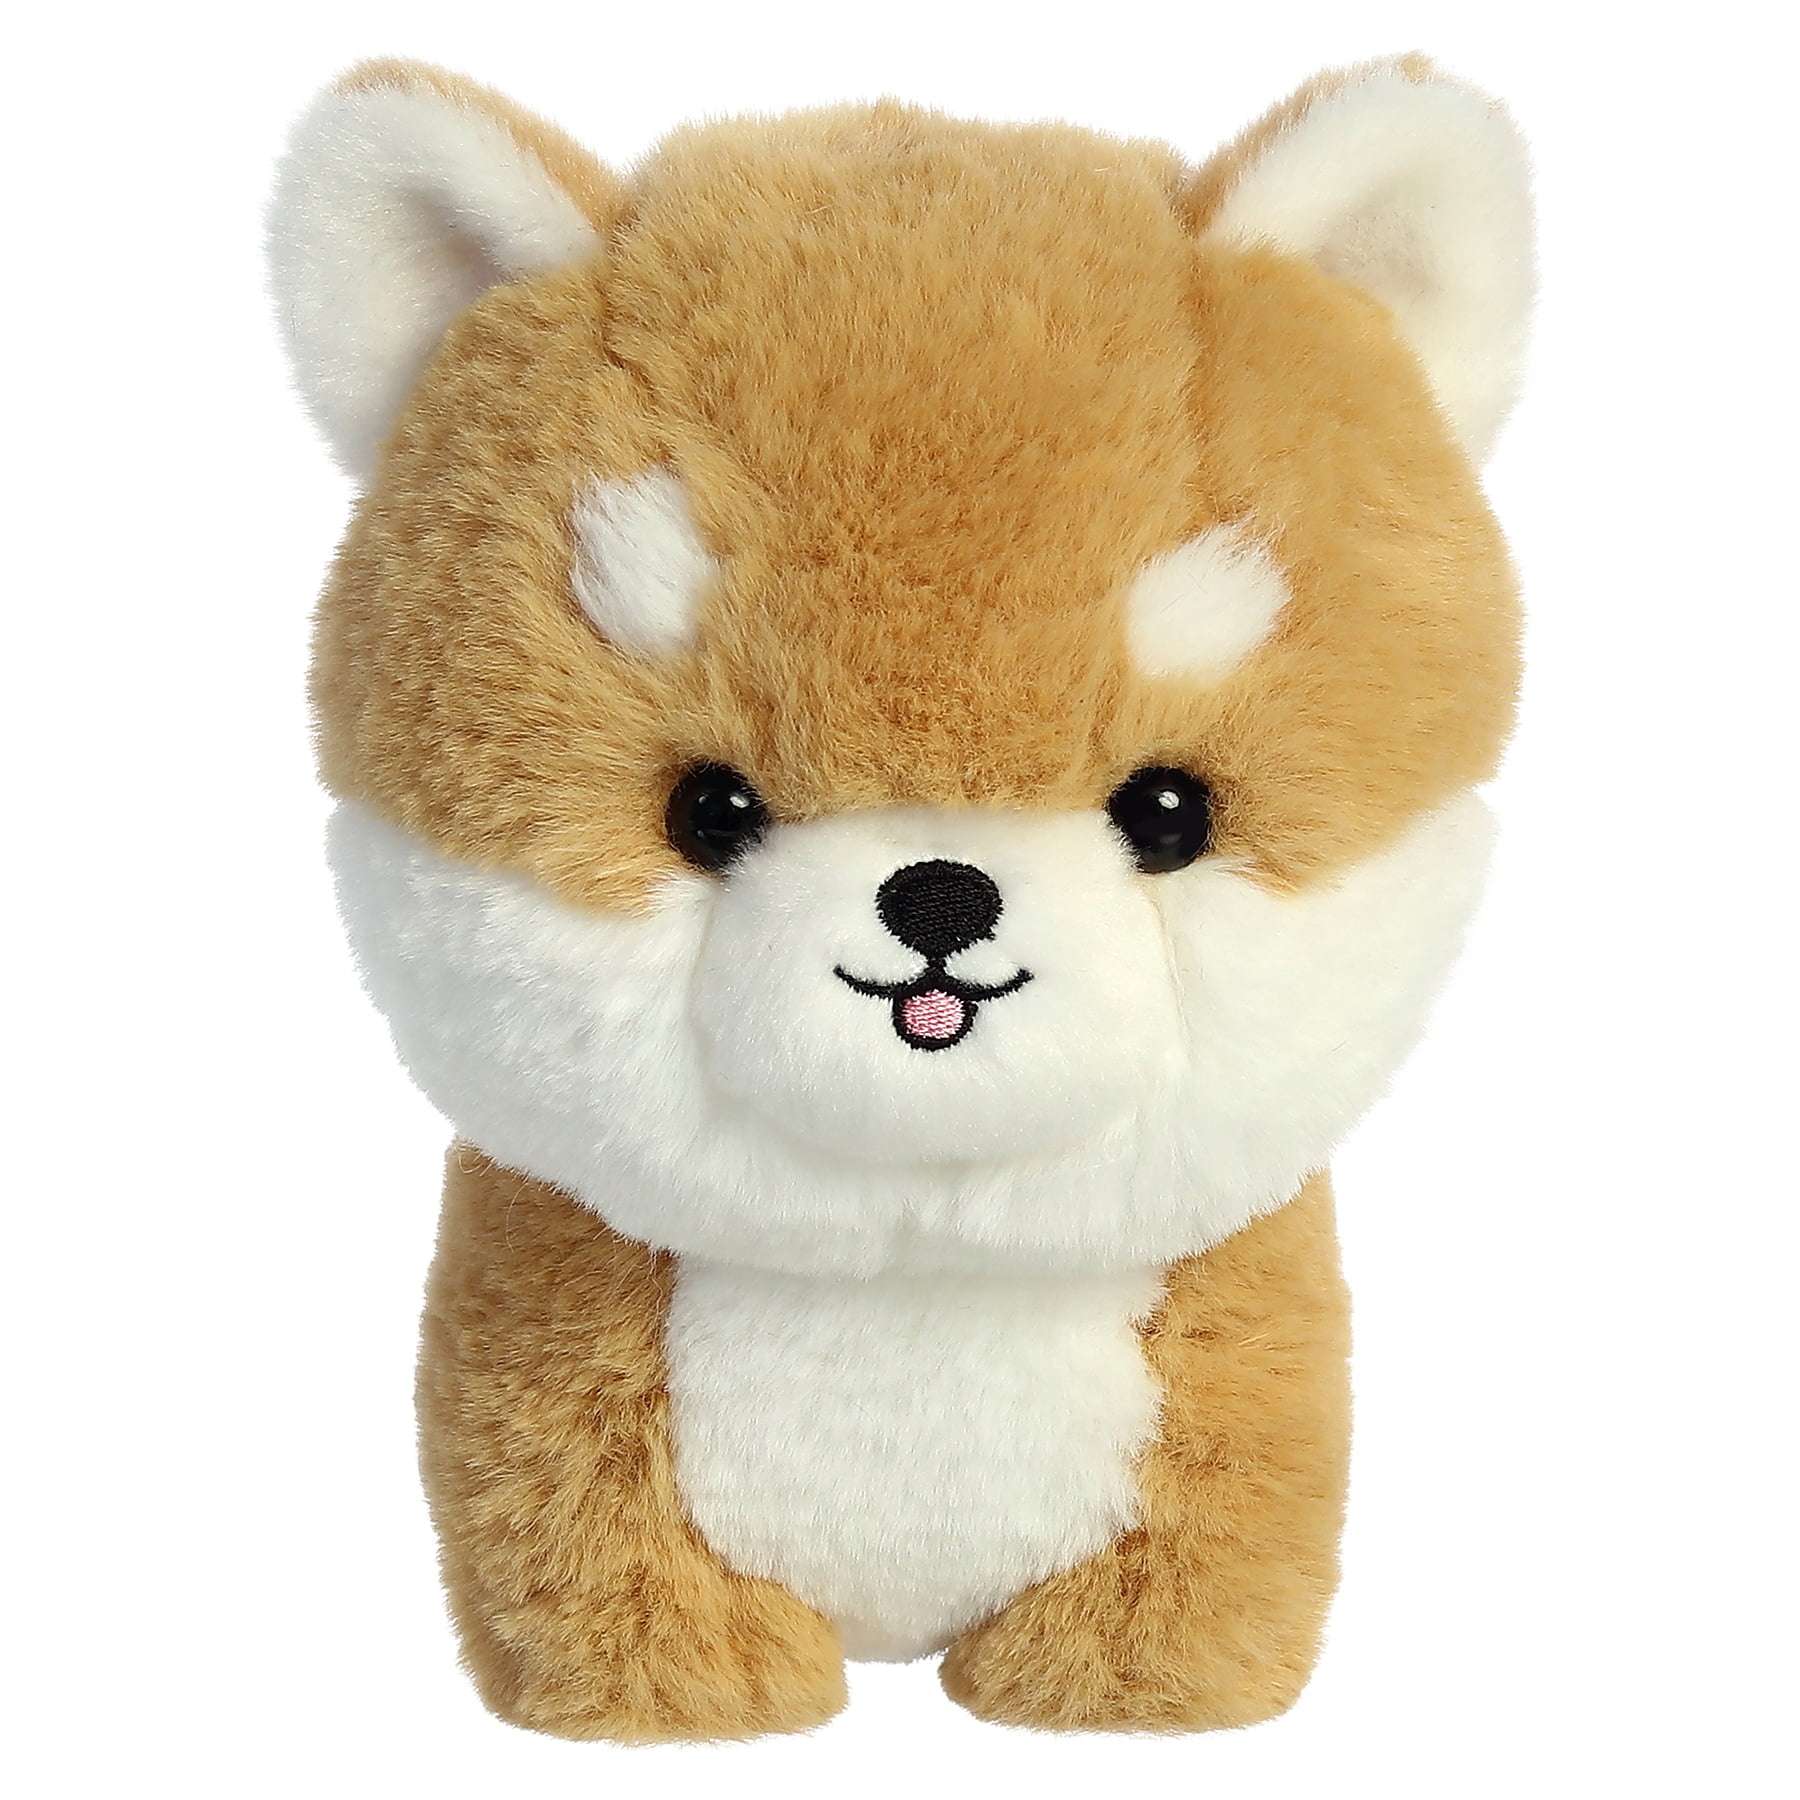 Shiba Inu Dog Soft Brown and White 10 inch Plush Fabric Stuffed Figure Toy 